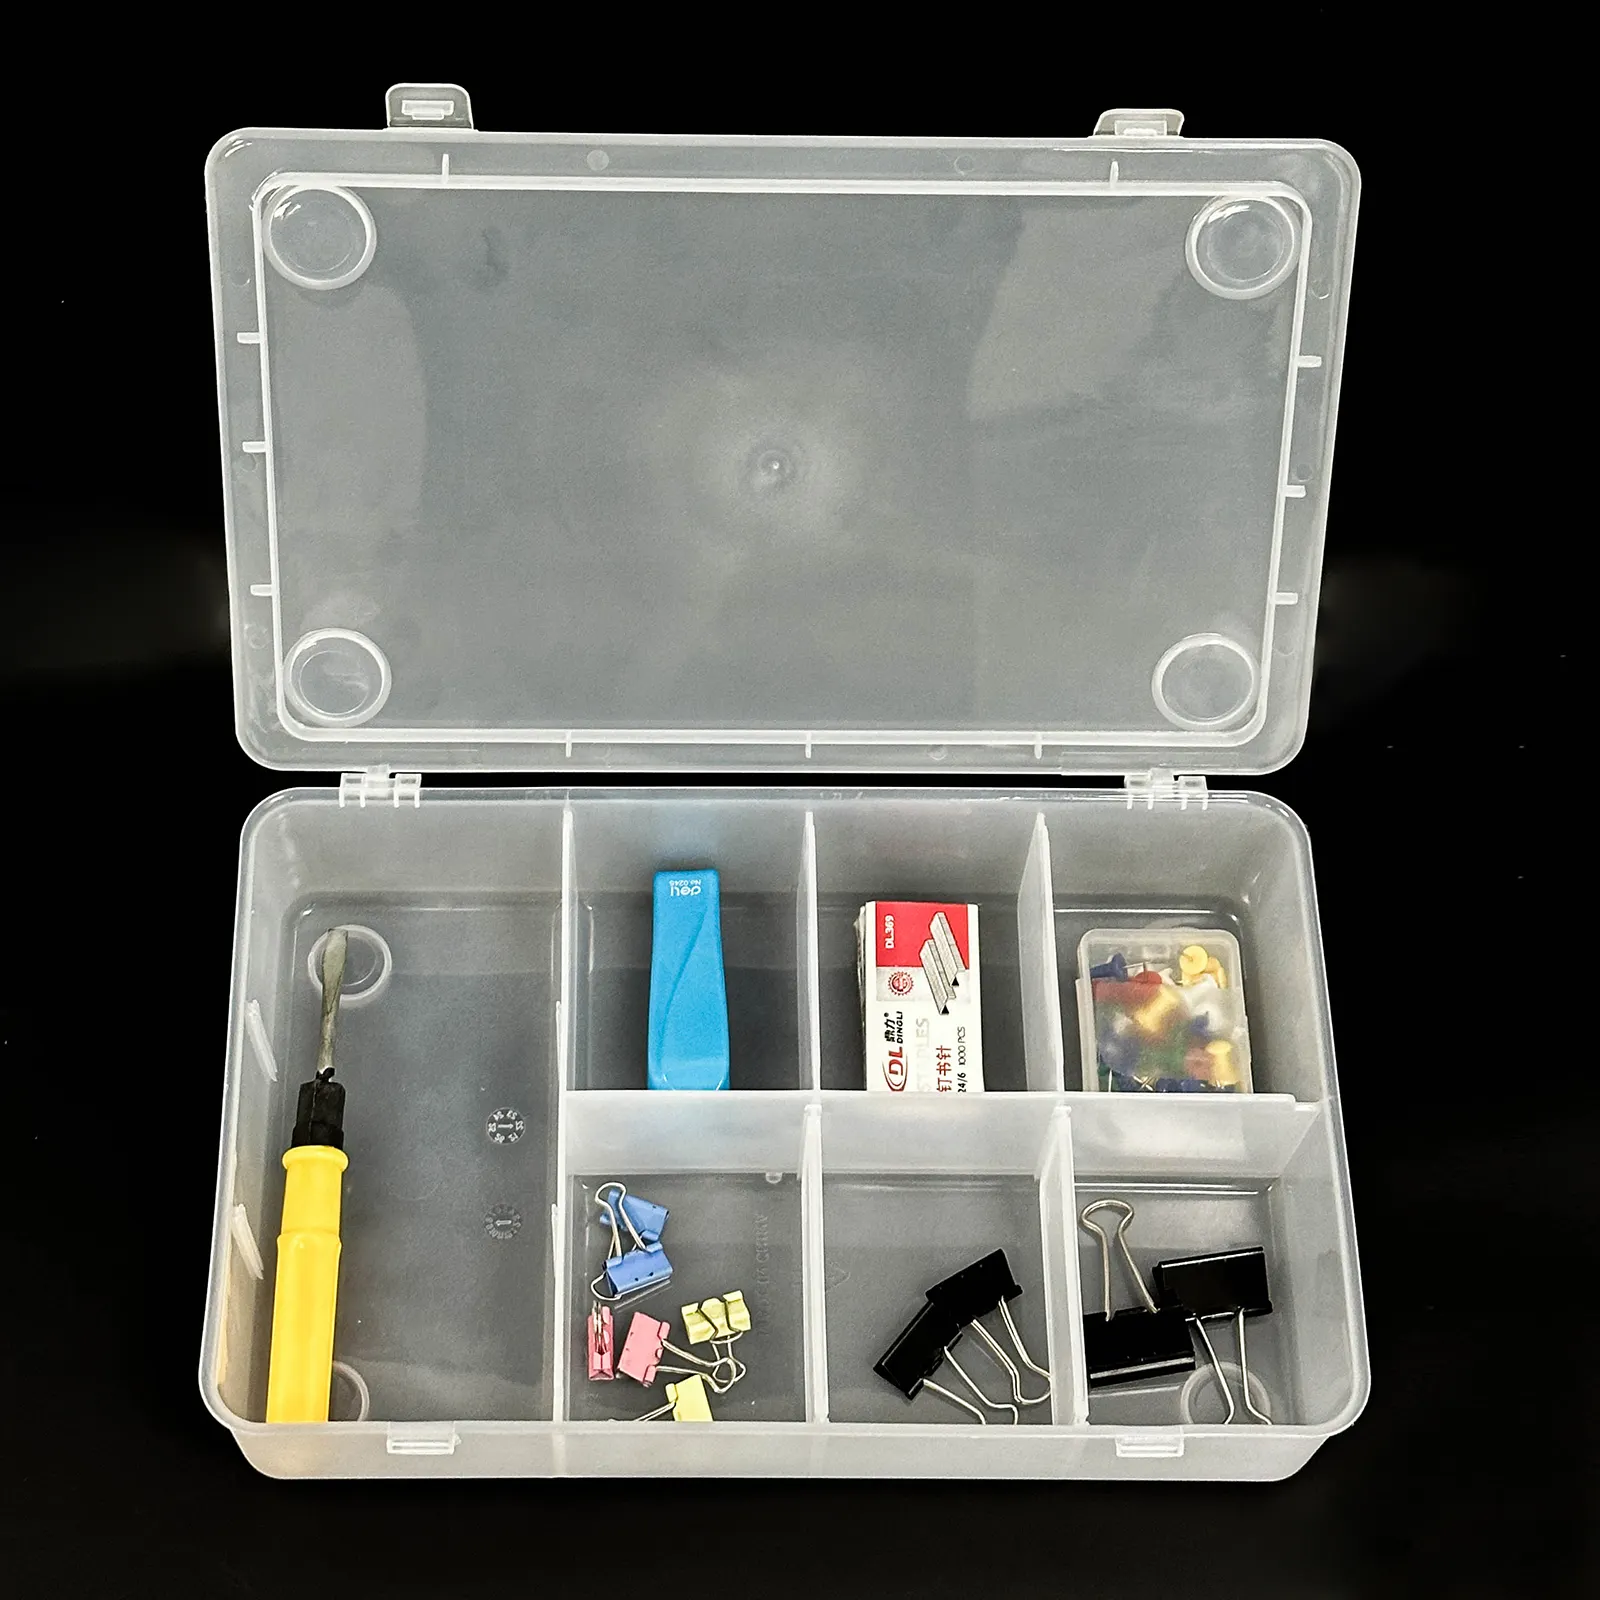 थोक घर भंडारण बॉक्स आयोजक उपकरण भागों मामले प्लास्टिक डिब्बे डिवाइडर के साथ हार्डवेयर बॉक्स